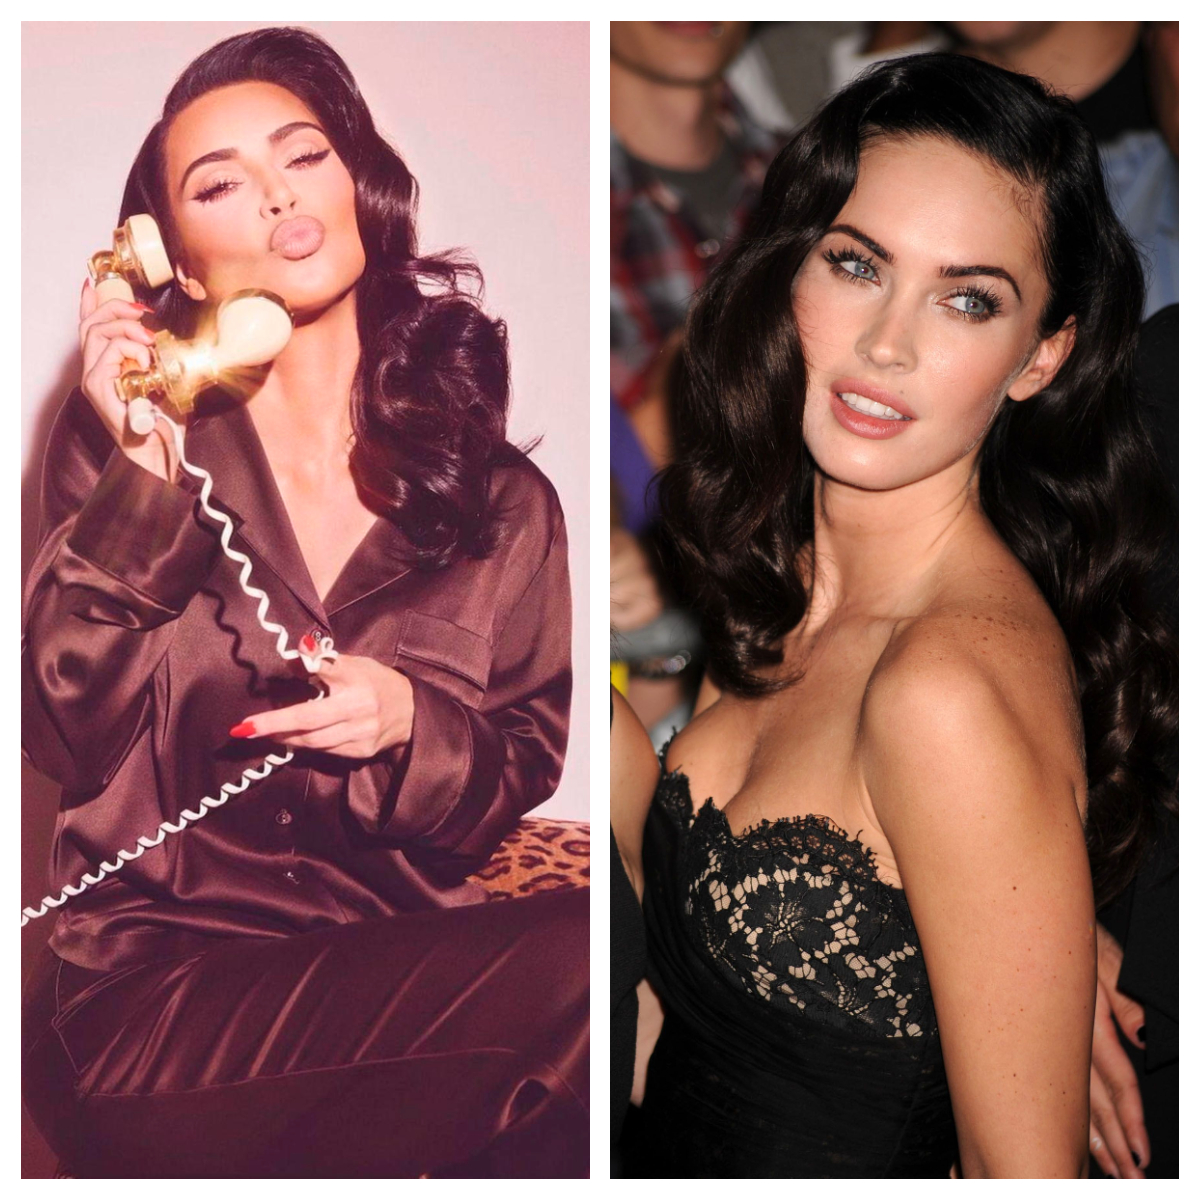 Matchy-matchy! Kim Kardashian și Megan Fox au purtat aceeași rochie. Cum au reacționat fanii?